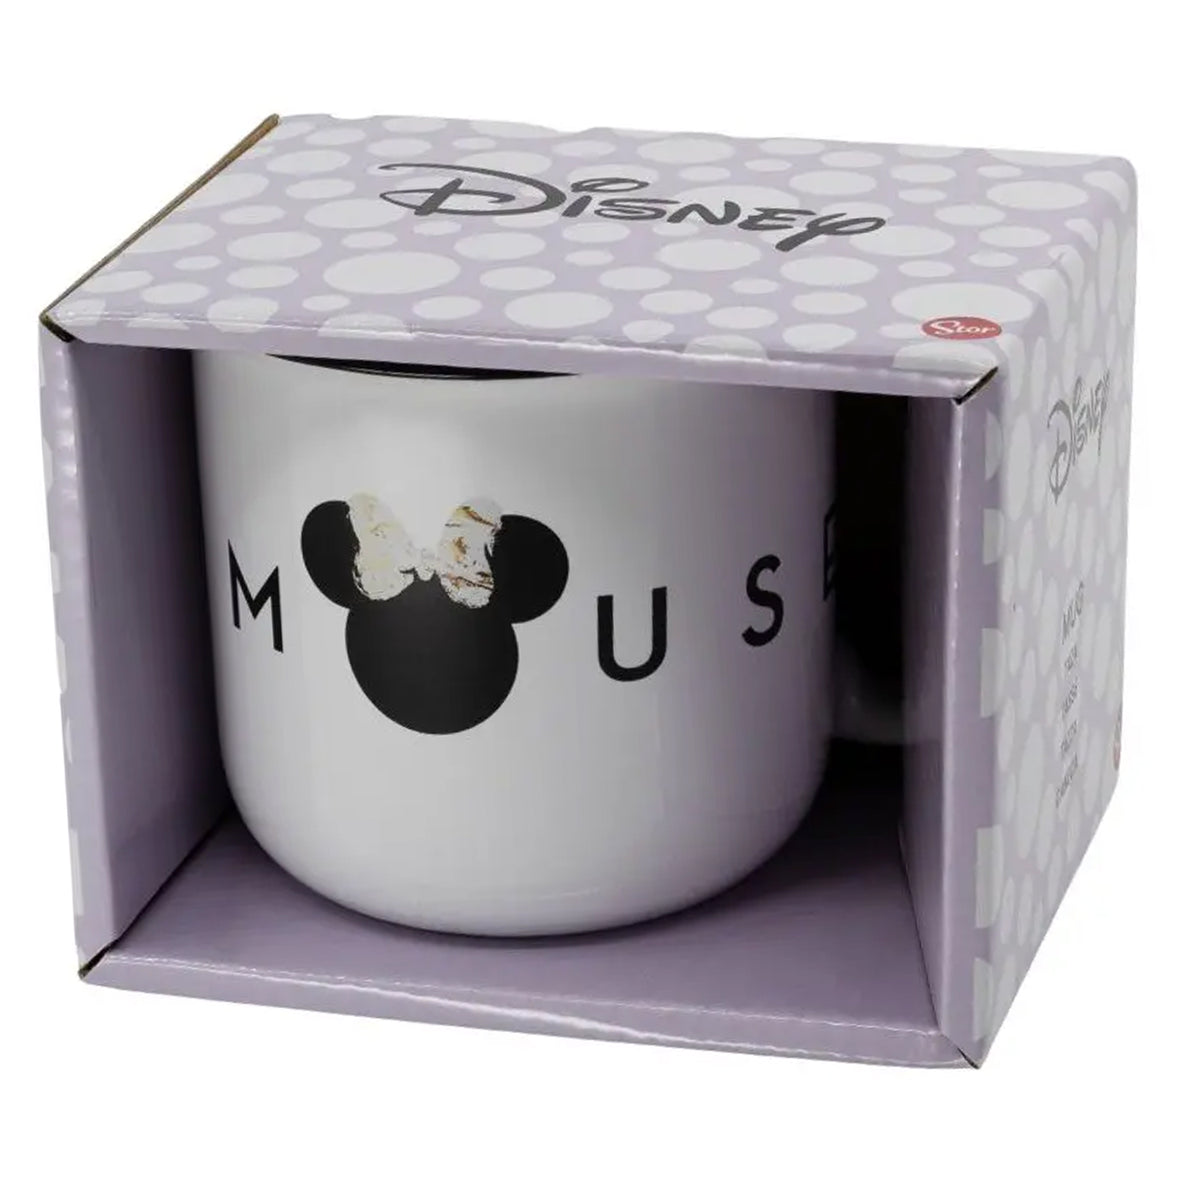 Lucas Disney ceramic drinking mug